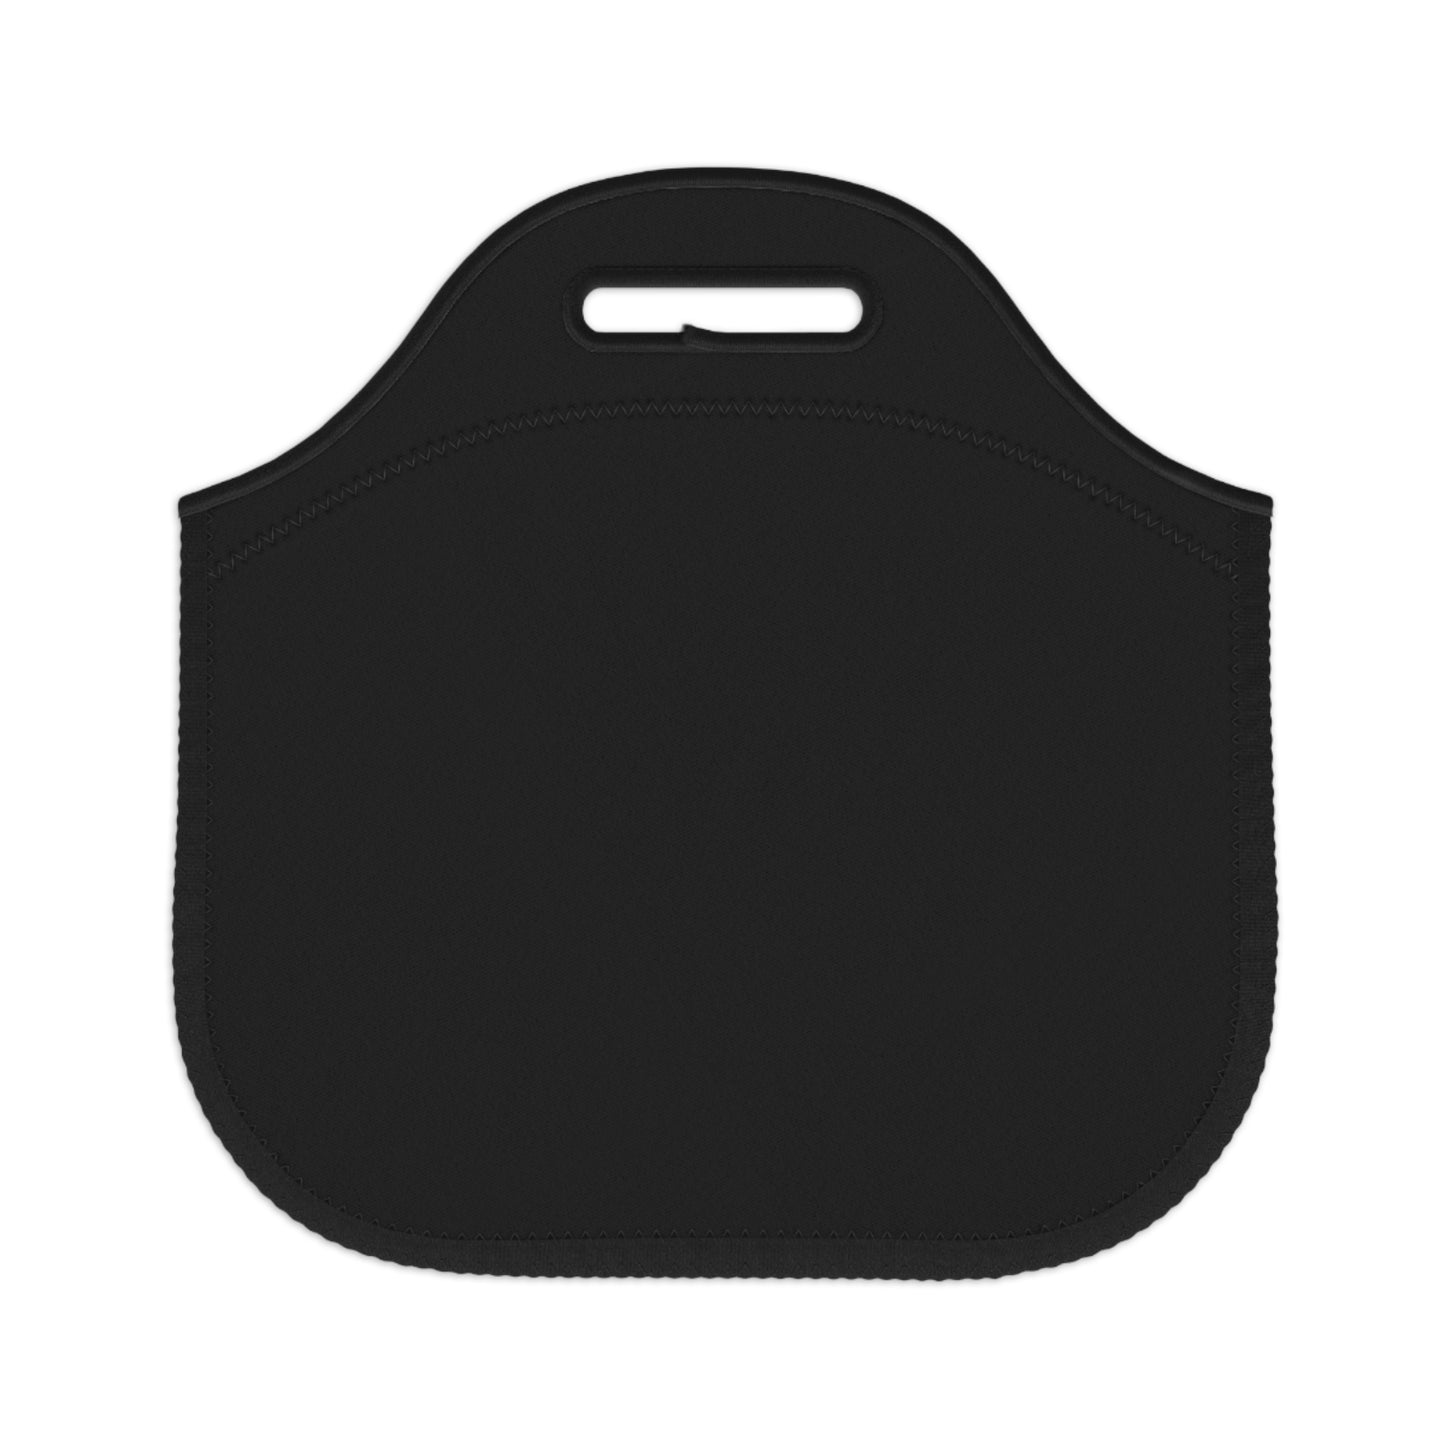 Comet Football - Black Camo Neoprene Lunch Bag